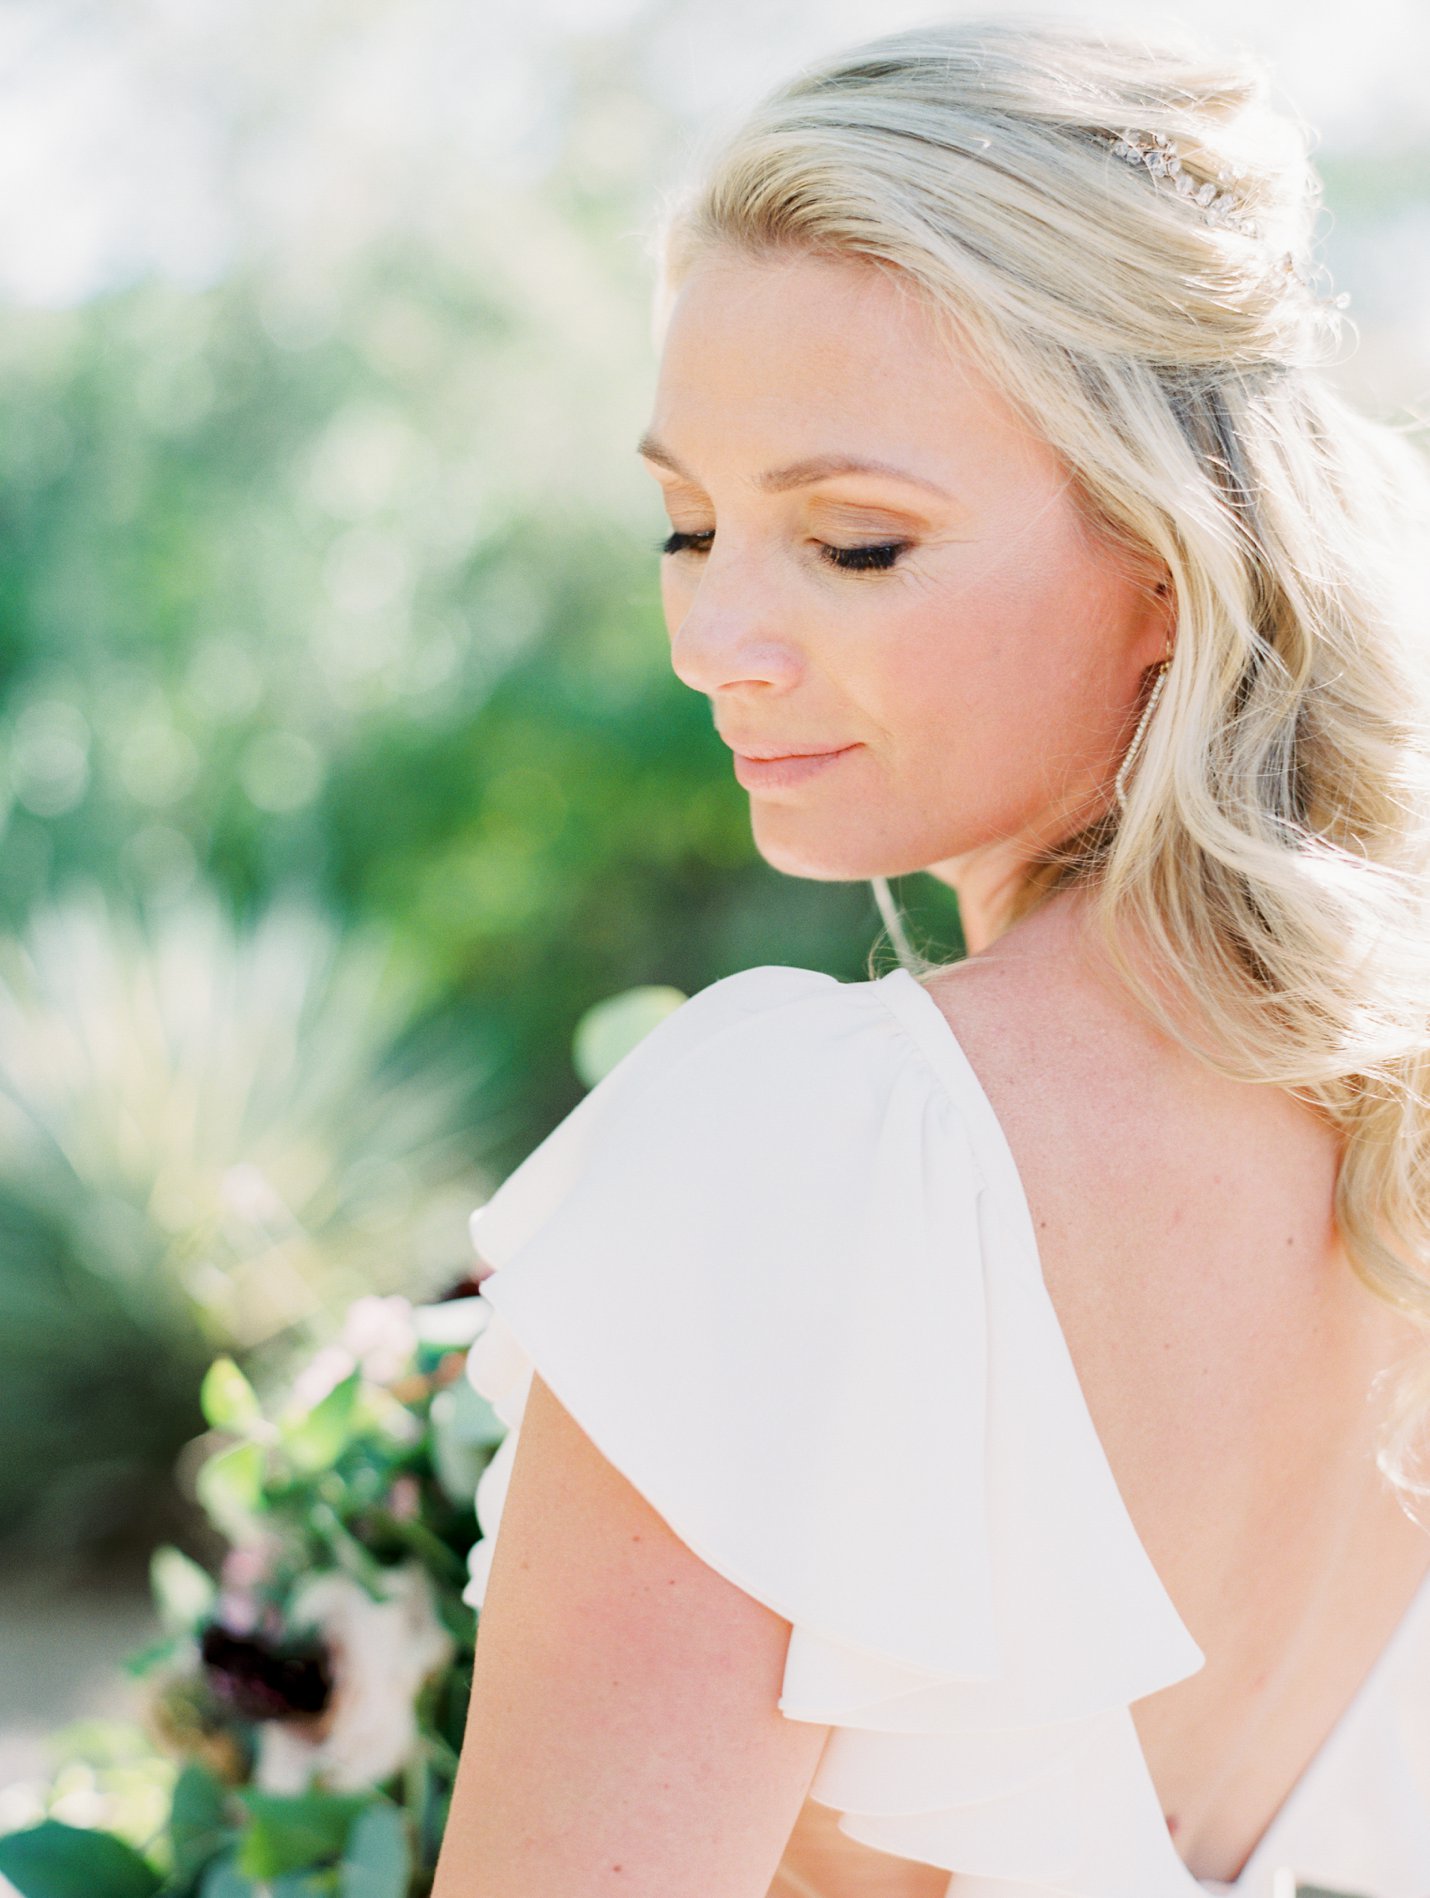 Four Seasons Scottsdale Wedding - Scottsdale Wedding Photographer - Rachel Solomon Photography